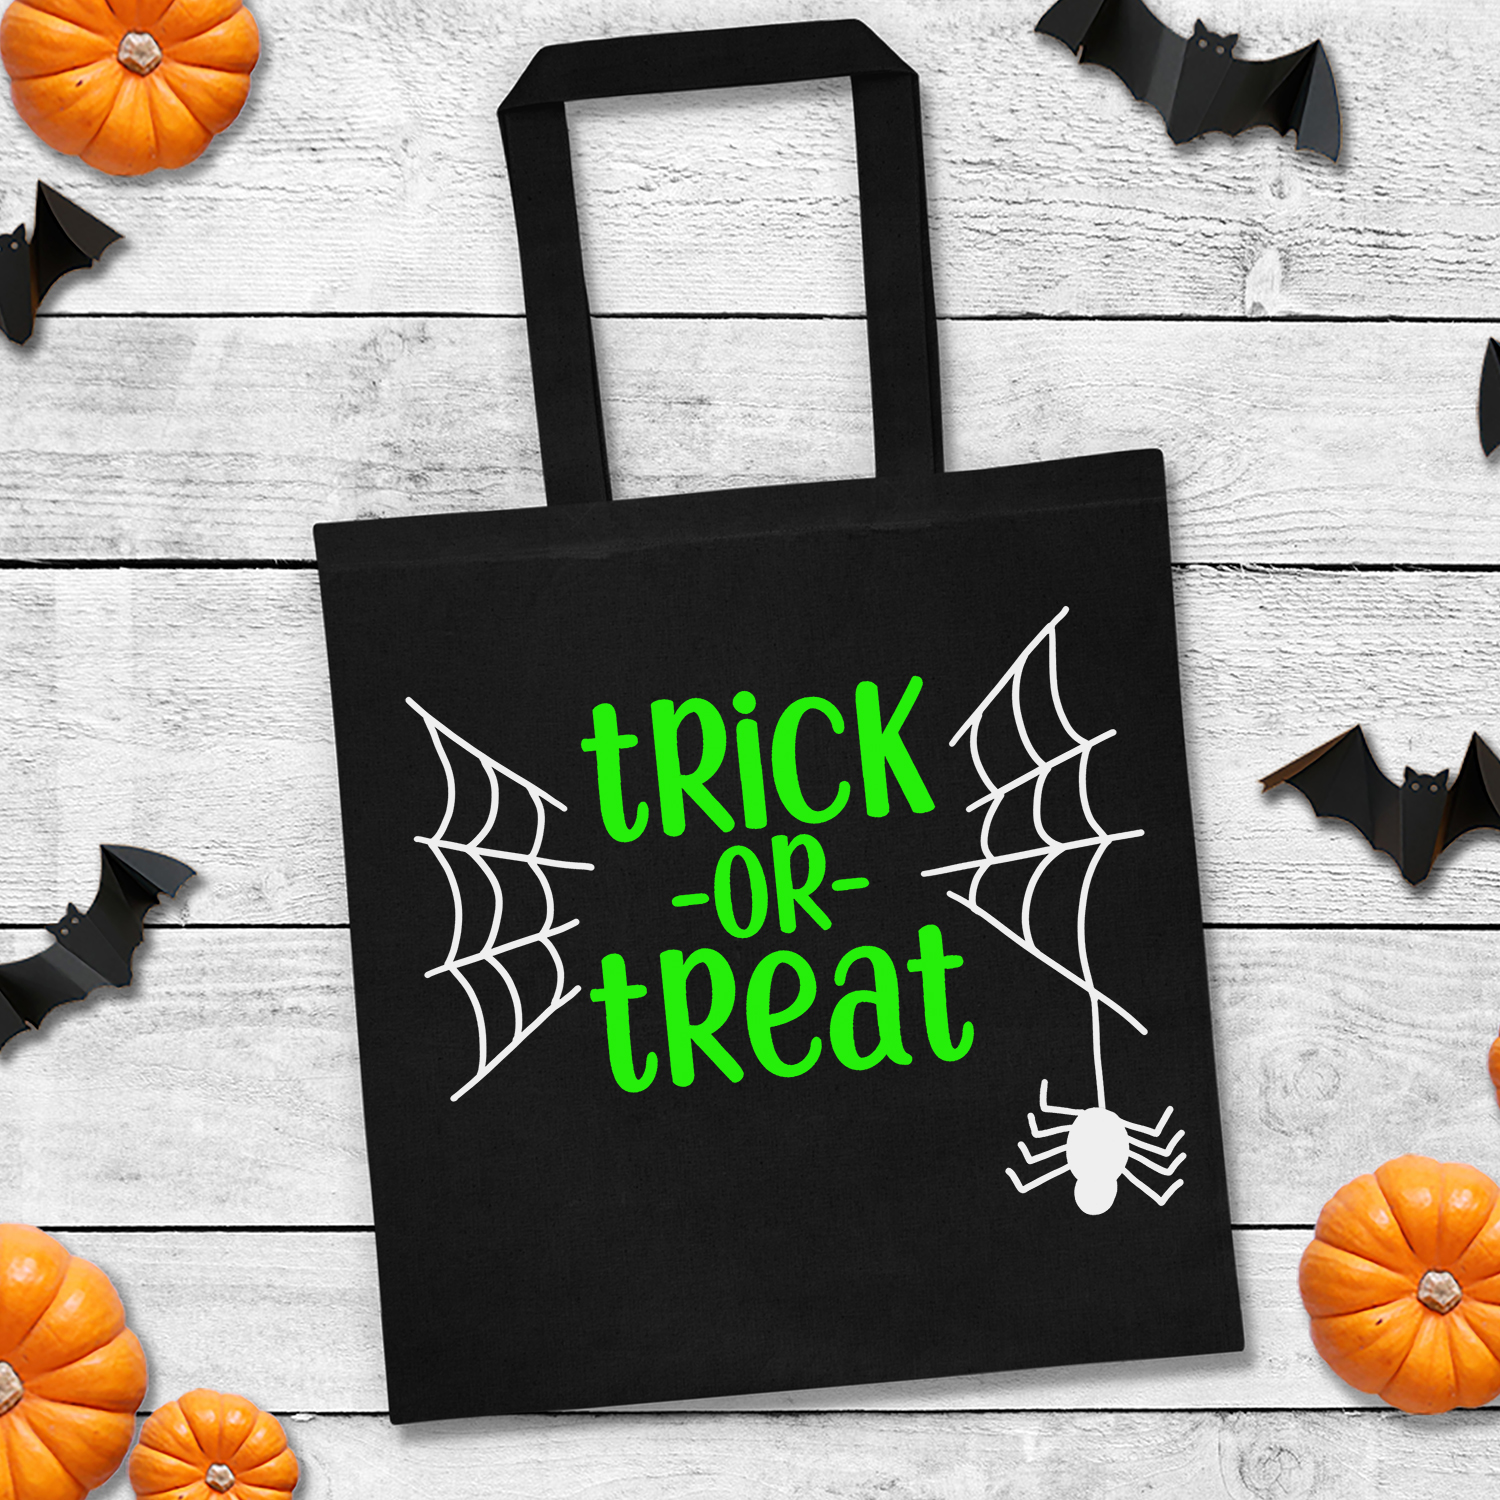 Cricut Joy Tutorial: Halloween Trick or Treat Bags using Smart Materials -  Cricut UK Blog